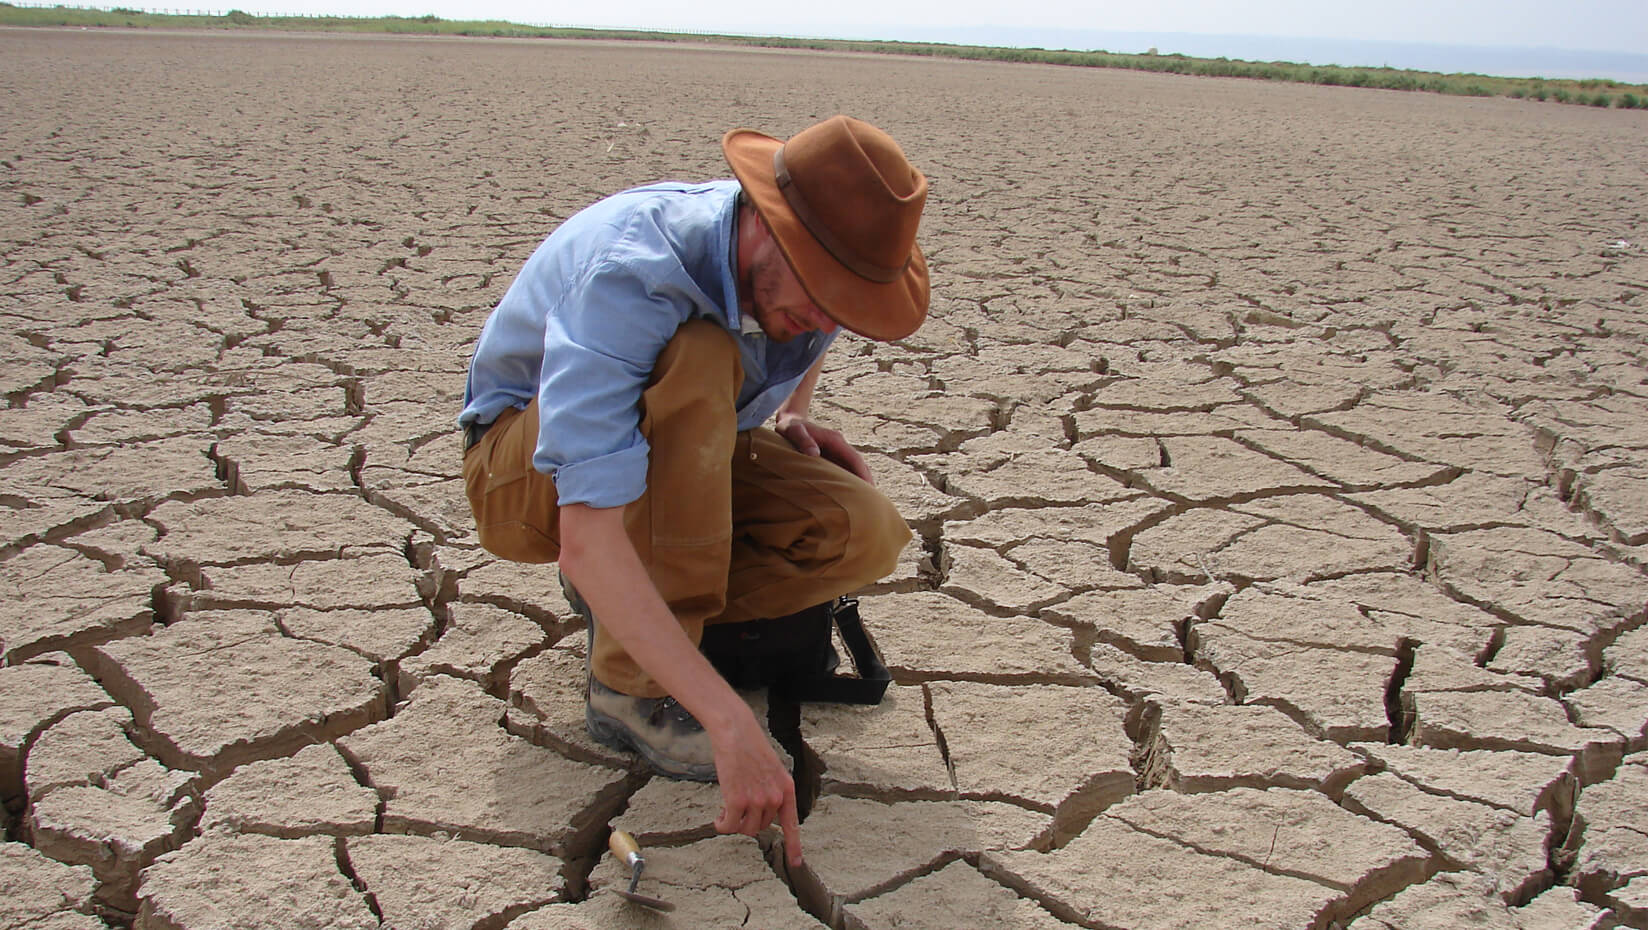 Aaron Putnam examining cracks in a desert